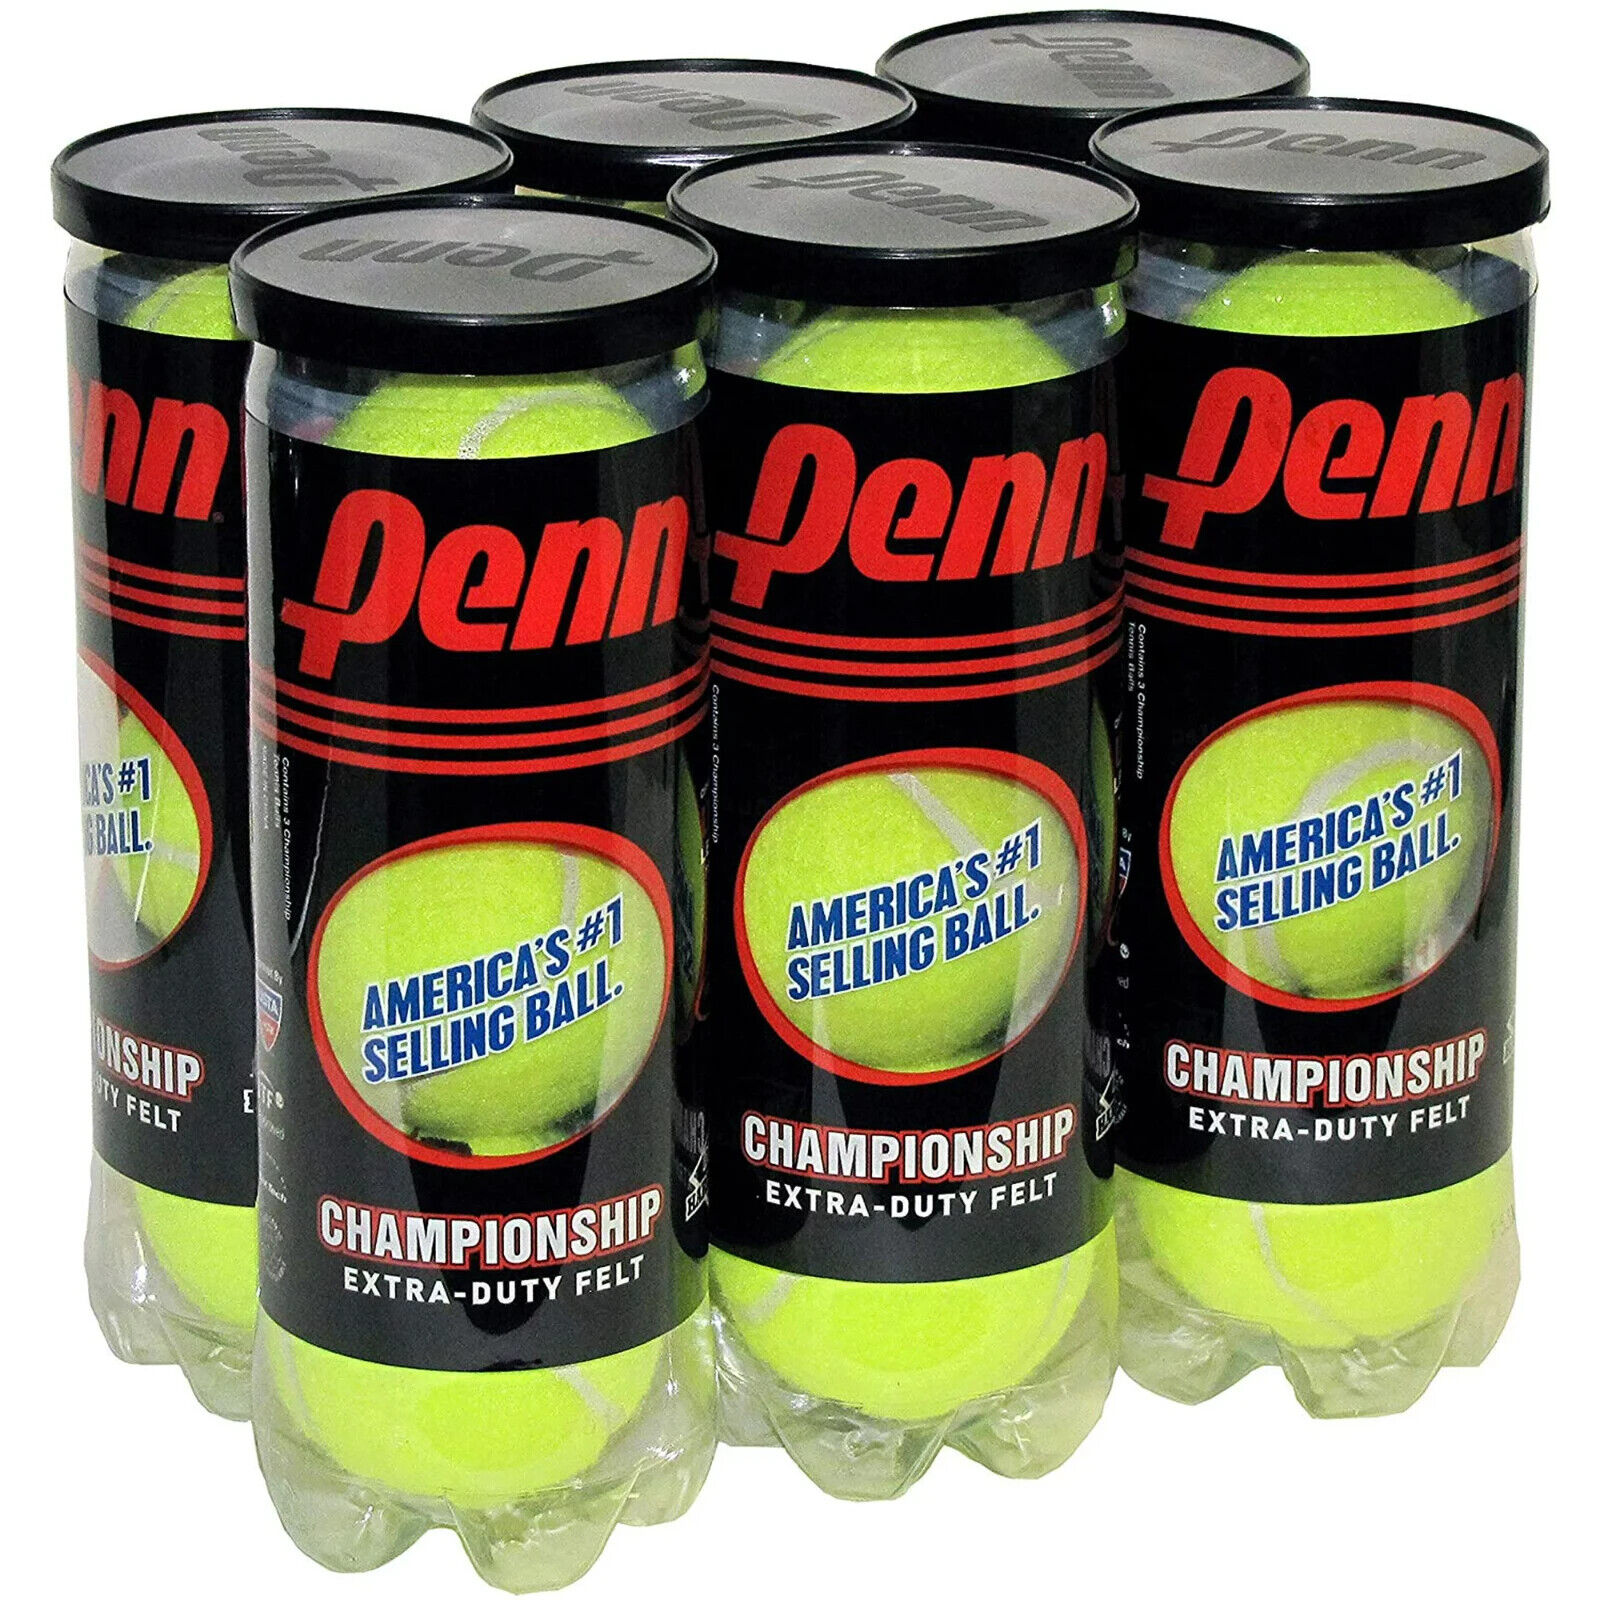 Penn Championship Extra-Duty Tennis Balls 6 Pack (6 Cans, 18 Balls) 